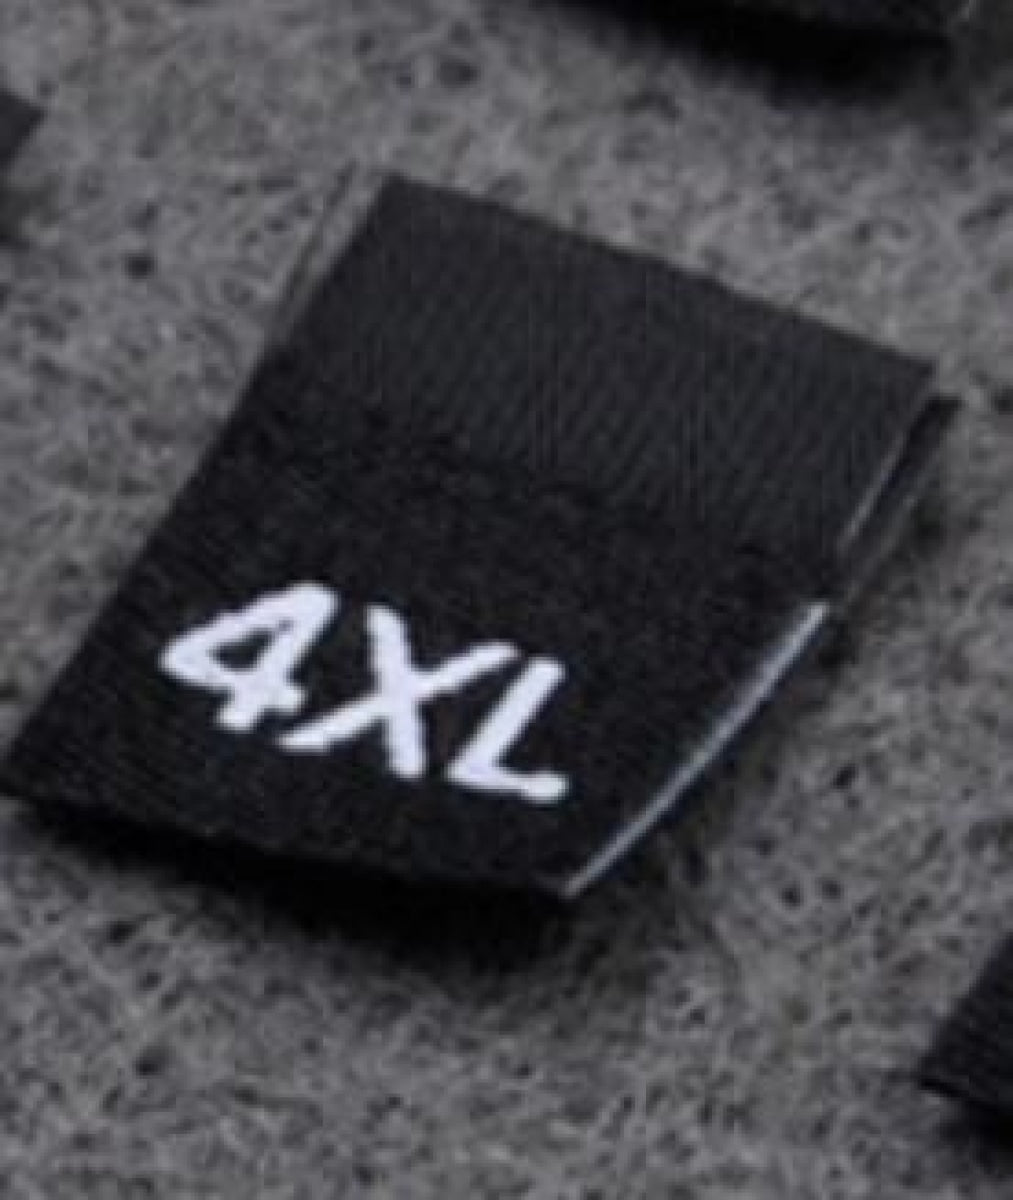 10-100pcs Clothing Size Label Tags XS S M L XL 2XL 3XL 4XL Black Text White Garment Clothes T Shirt Dress Fabric - 4XL Black - - Asia Sell